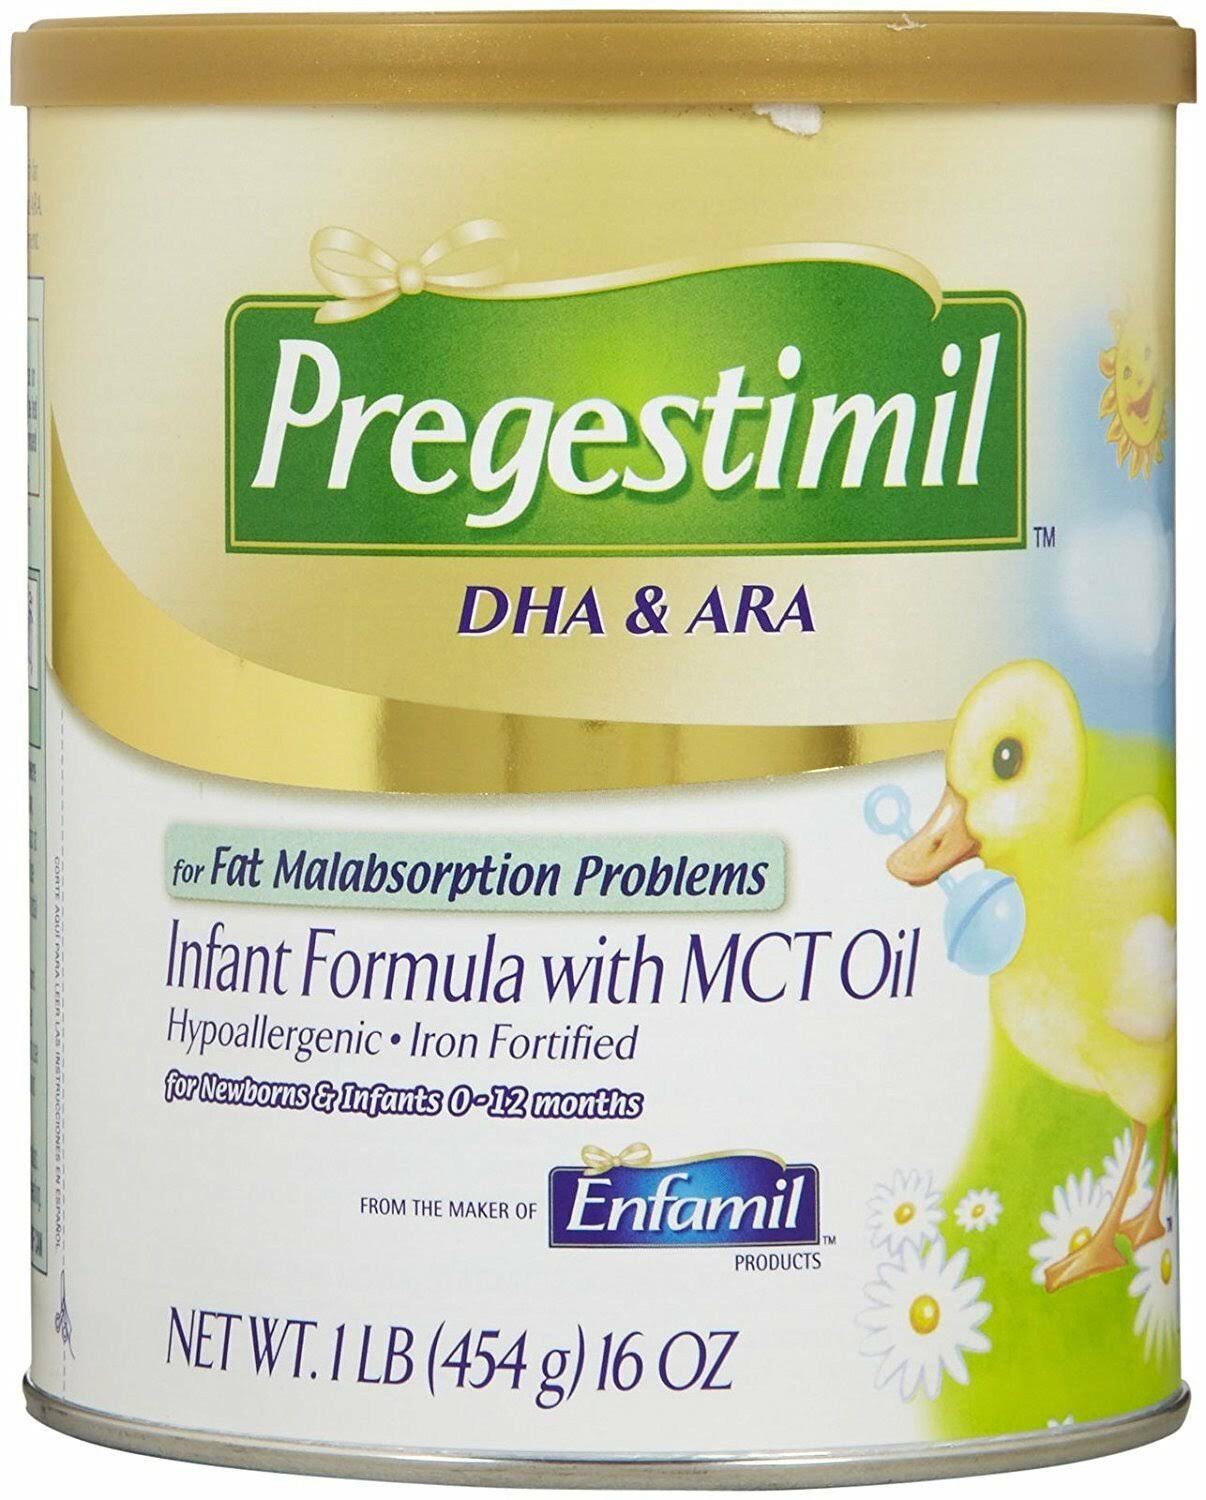 Pregestimil DHA & ARA Infant Formula with MCT Oil for Newborns & Infants 0-12 Months - 16oz